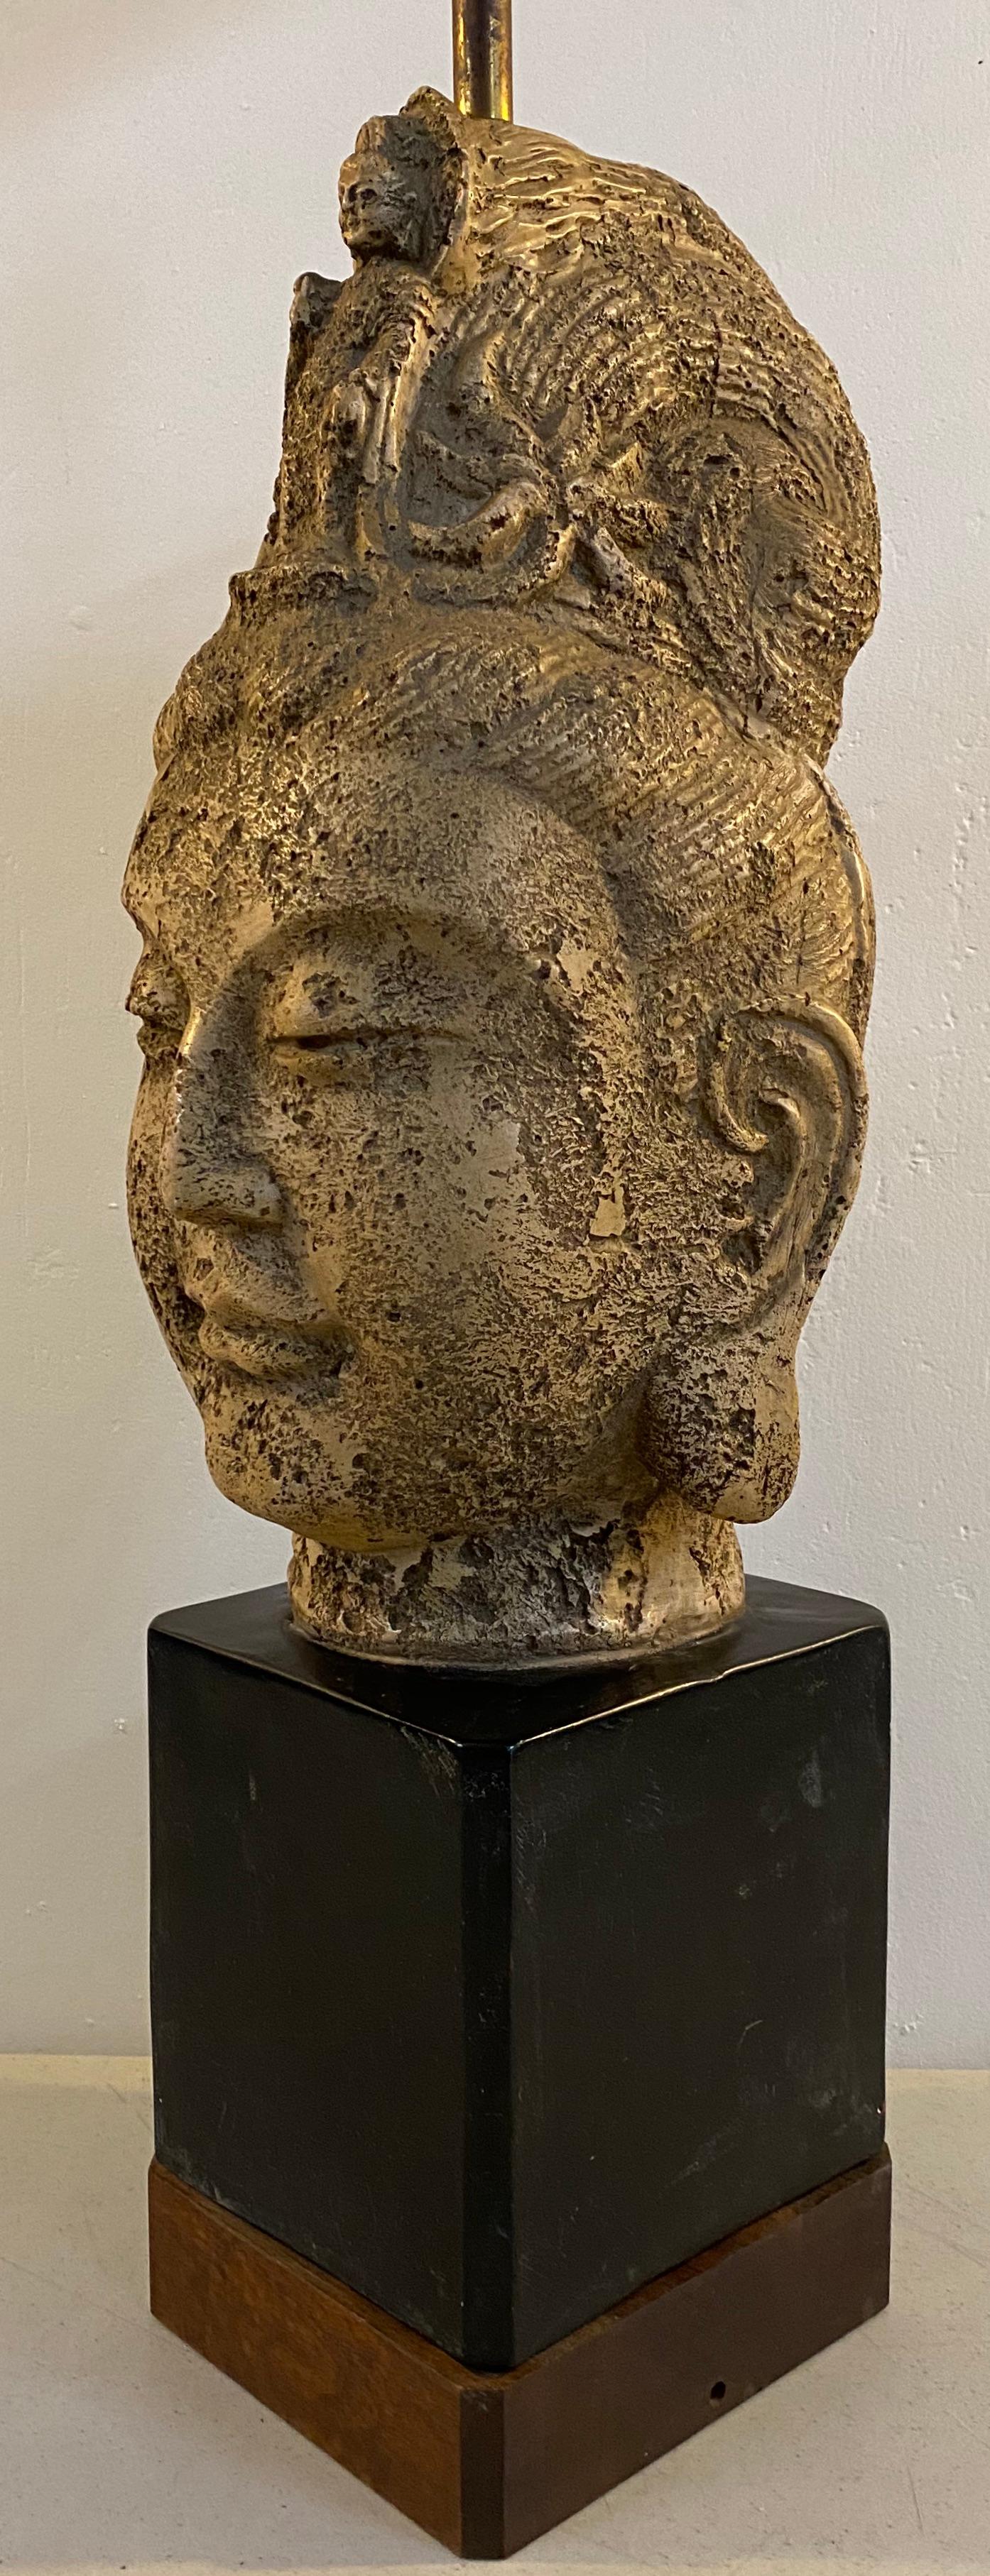 James Mont ceramic Tara Buddha head lamp, circa 1950

Dimensions: 6